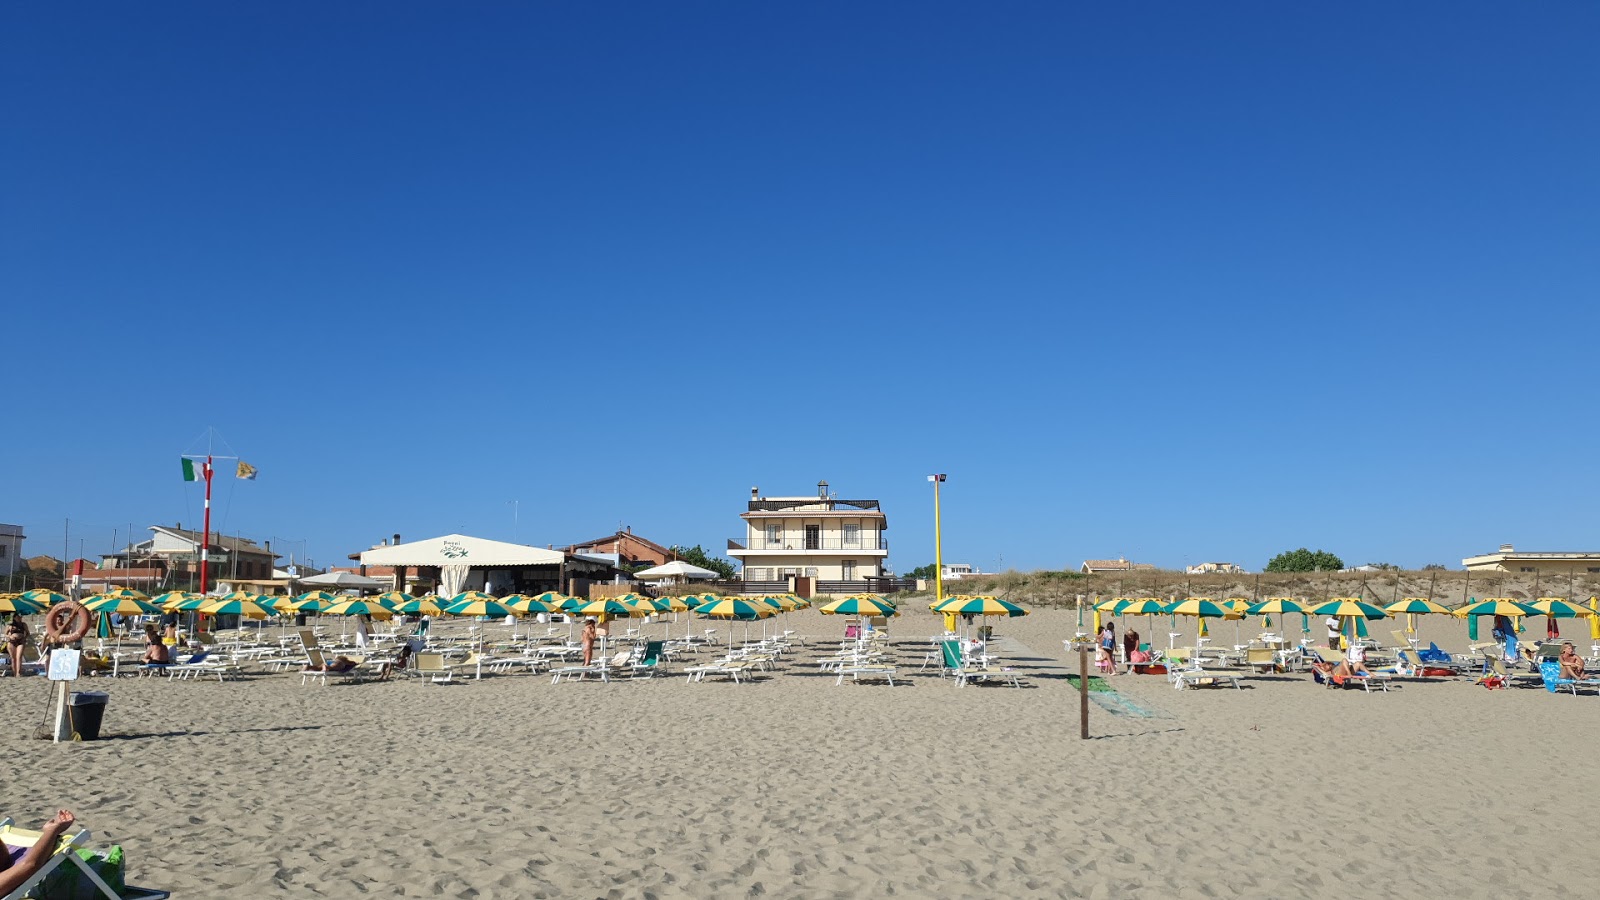 Foto de Lungomare Marina di Ardea Beach - lugar popular entre os apreciadores de relaxamento